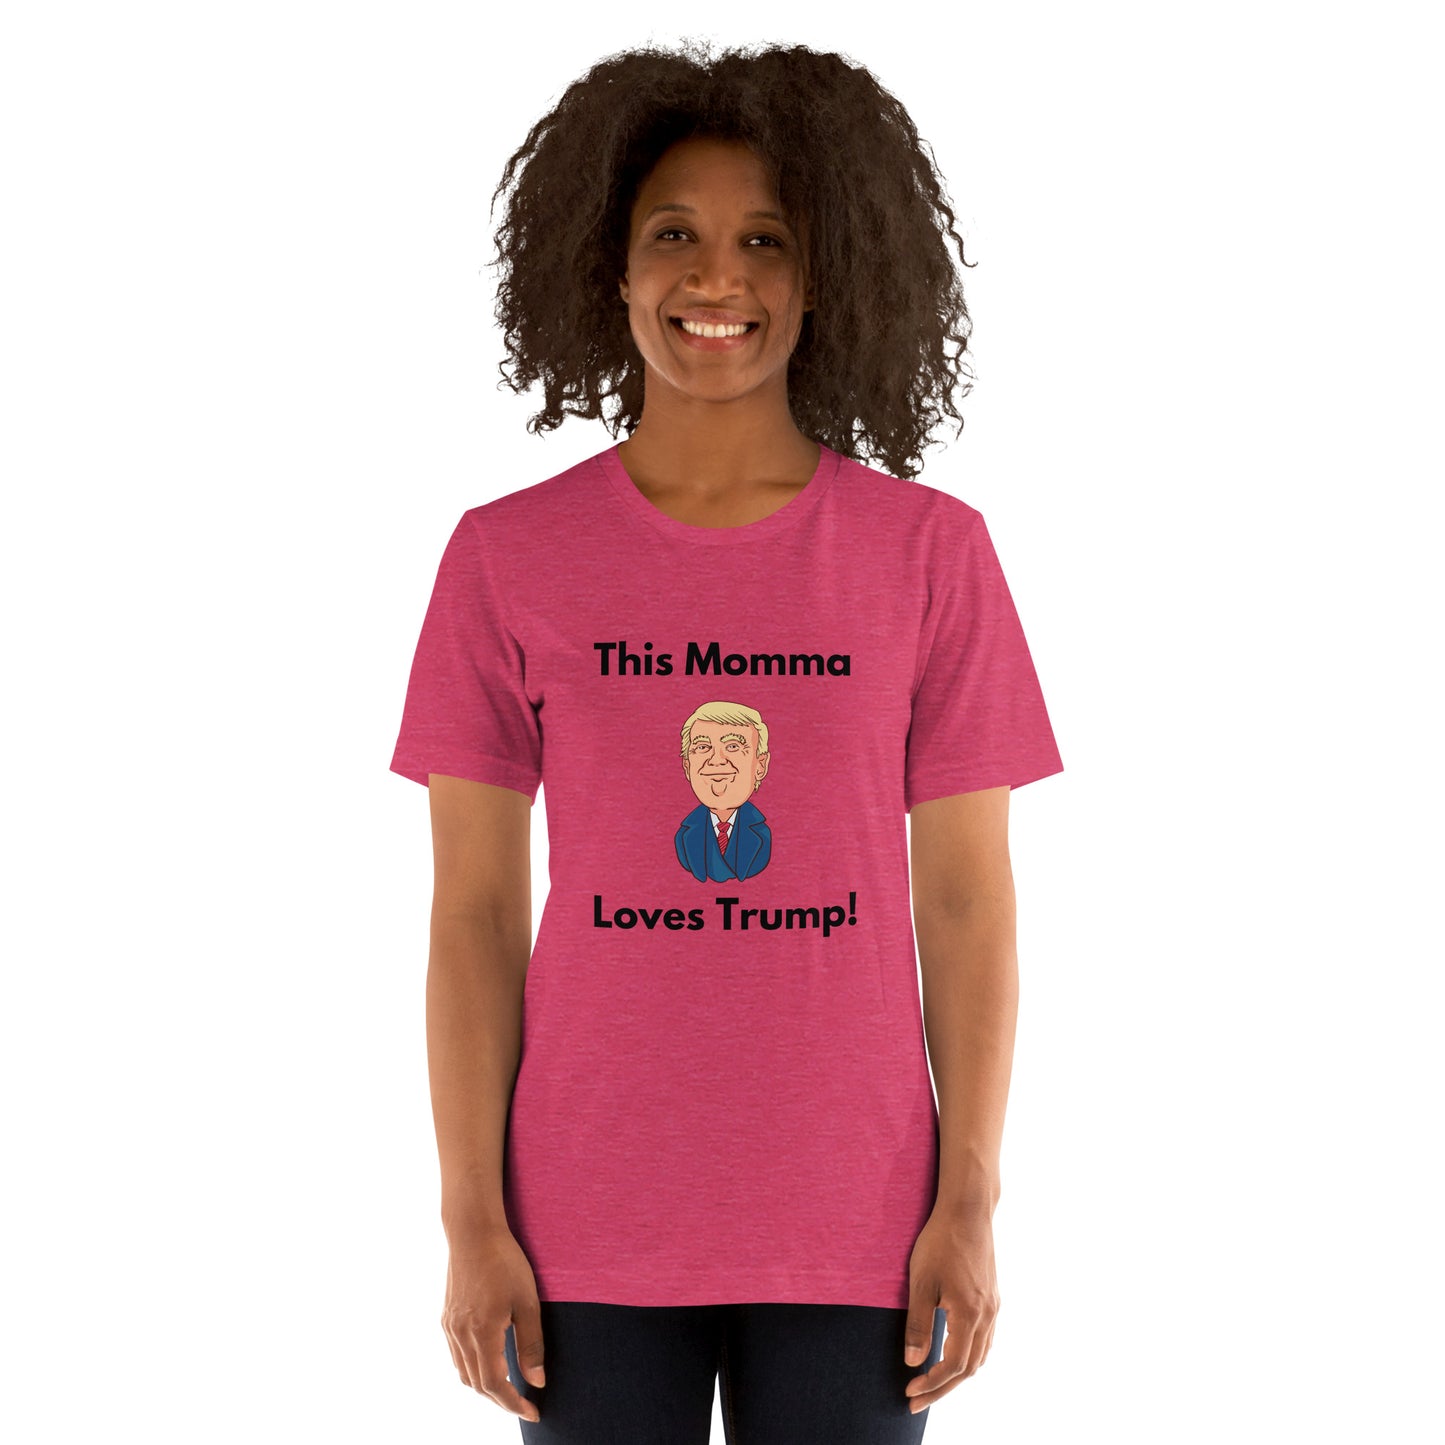 This Momma Loves Trump! Tee